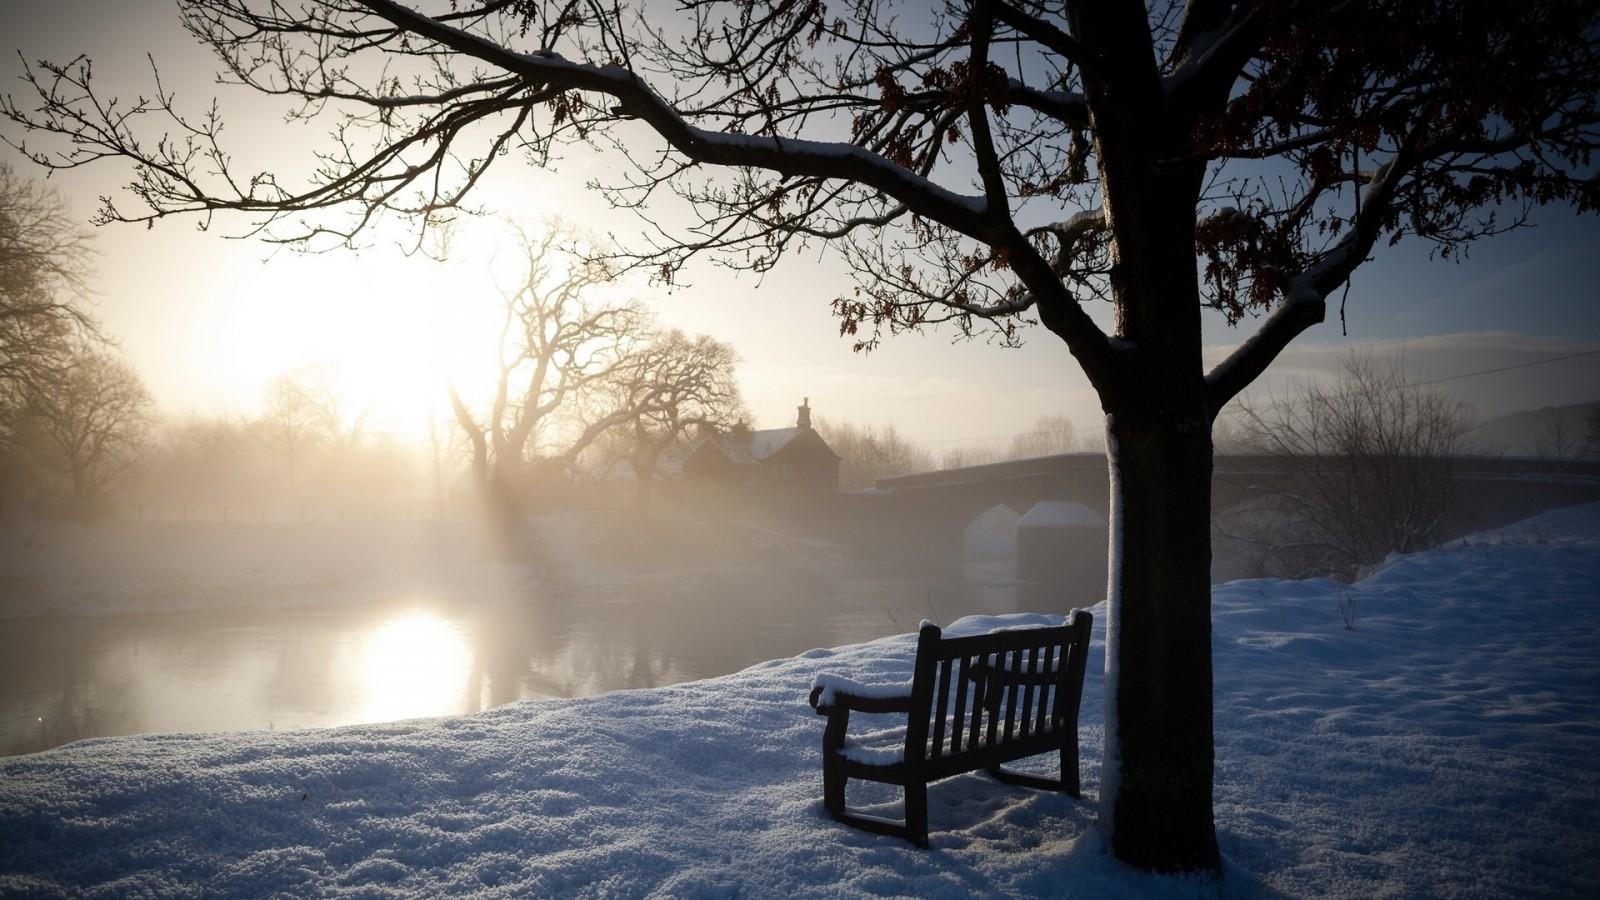 Download 1600x900 Winter, Morning, Bech, Snow, Tree, Bridge